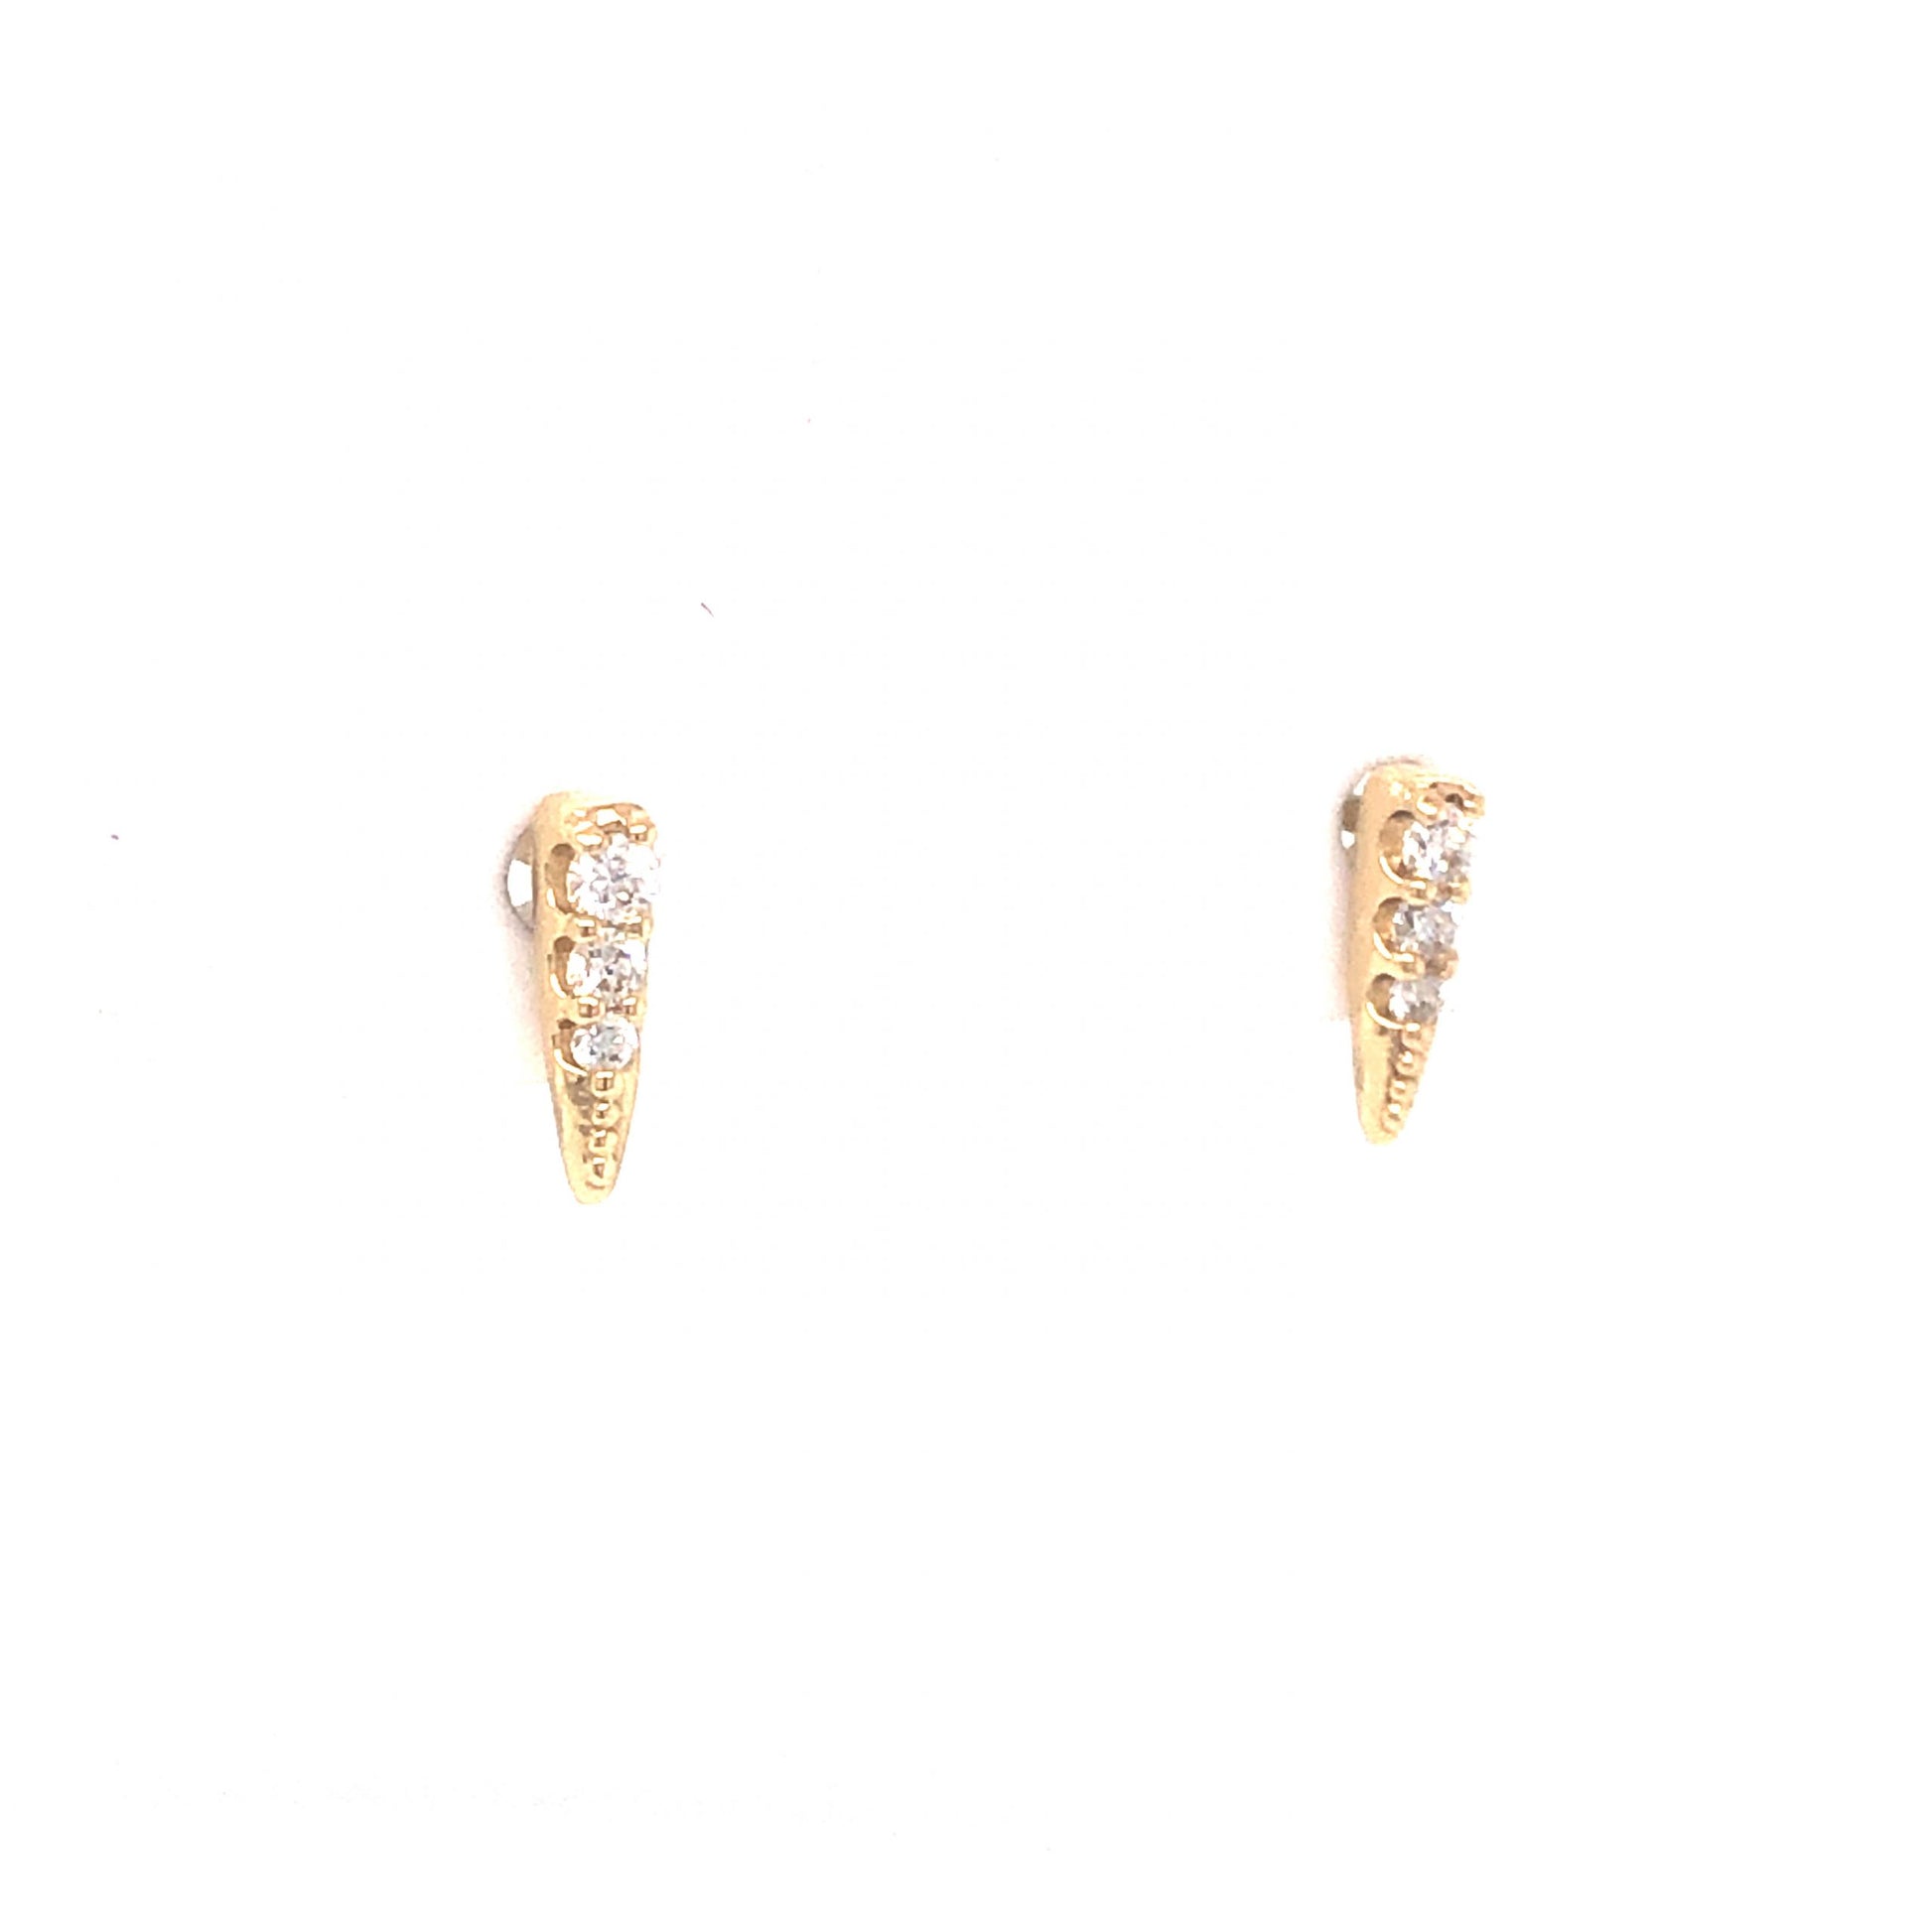 .07 Tapered Diamond Stud Earrings in 14K Yellow Gold